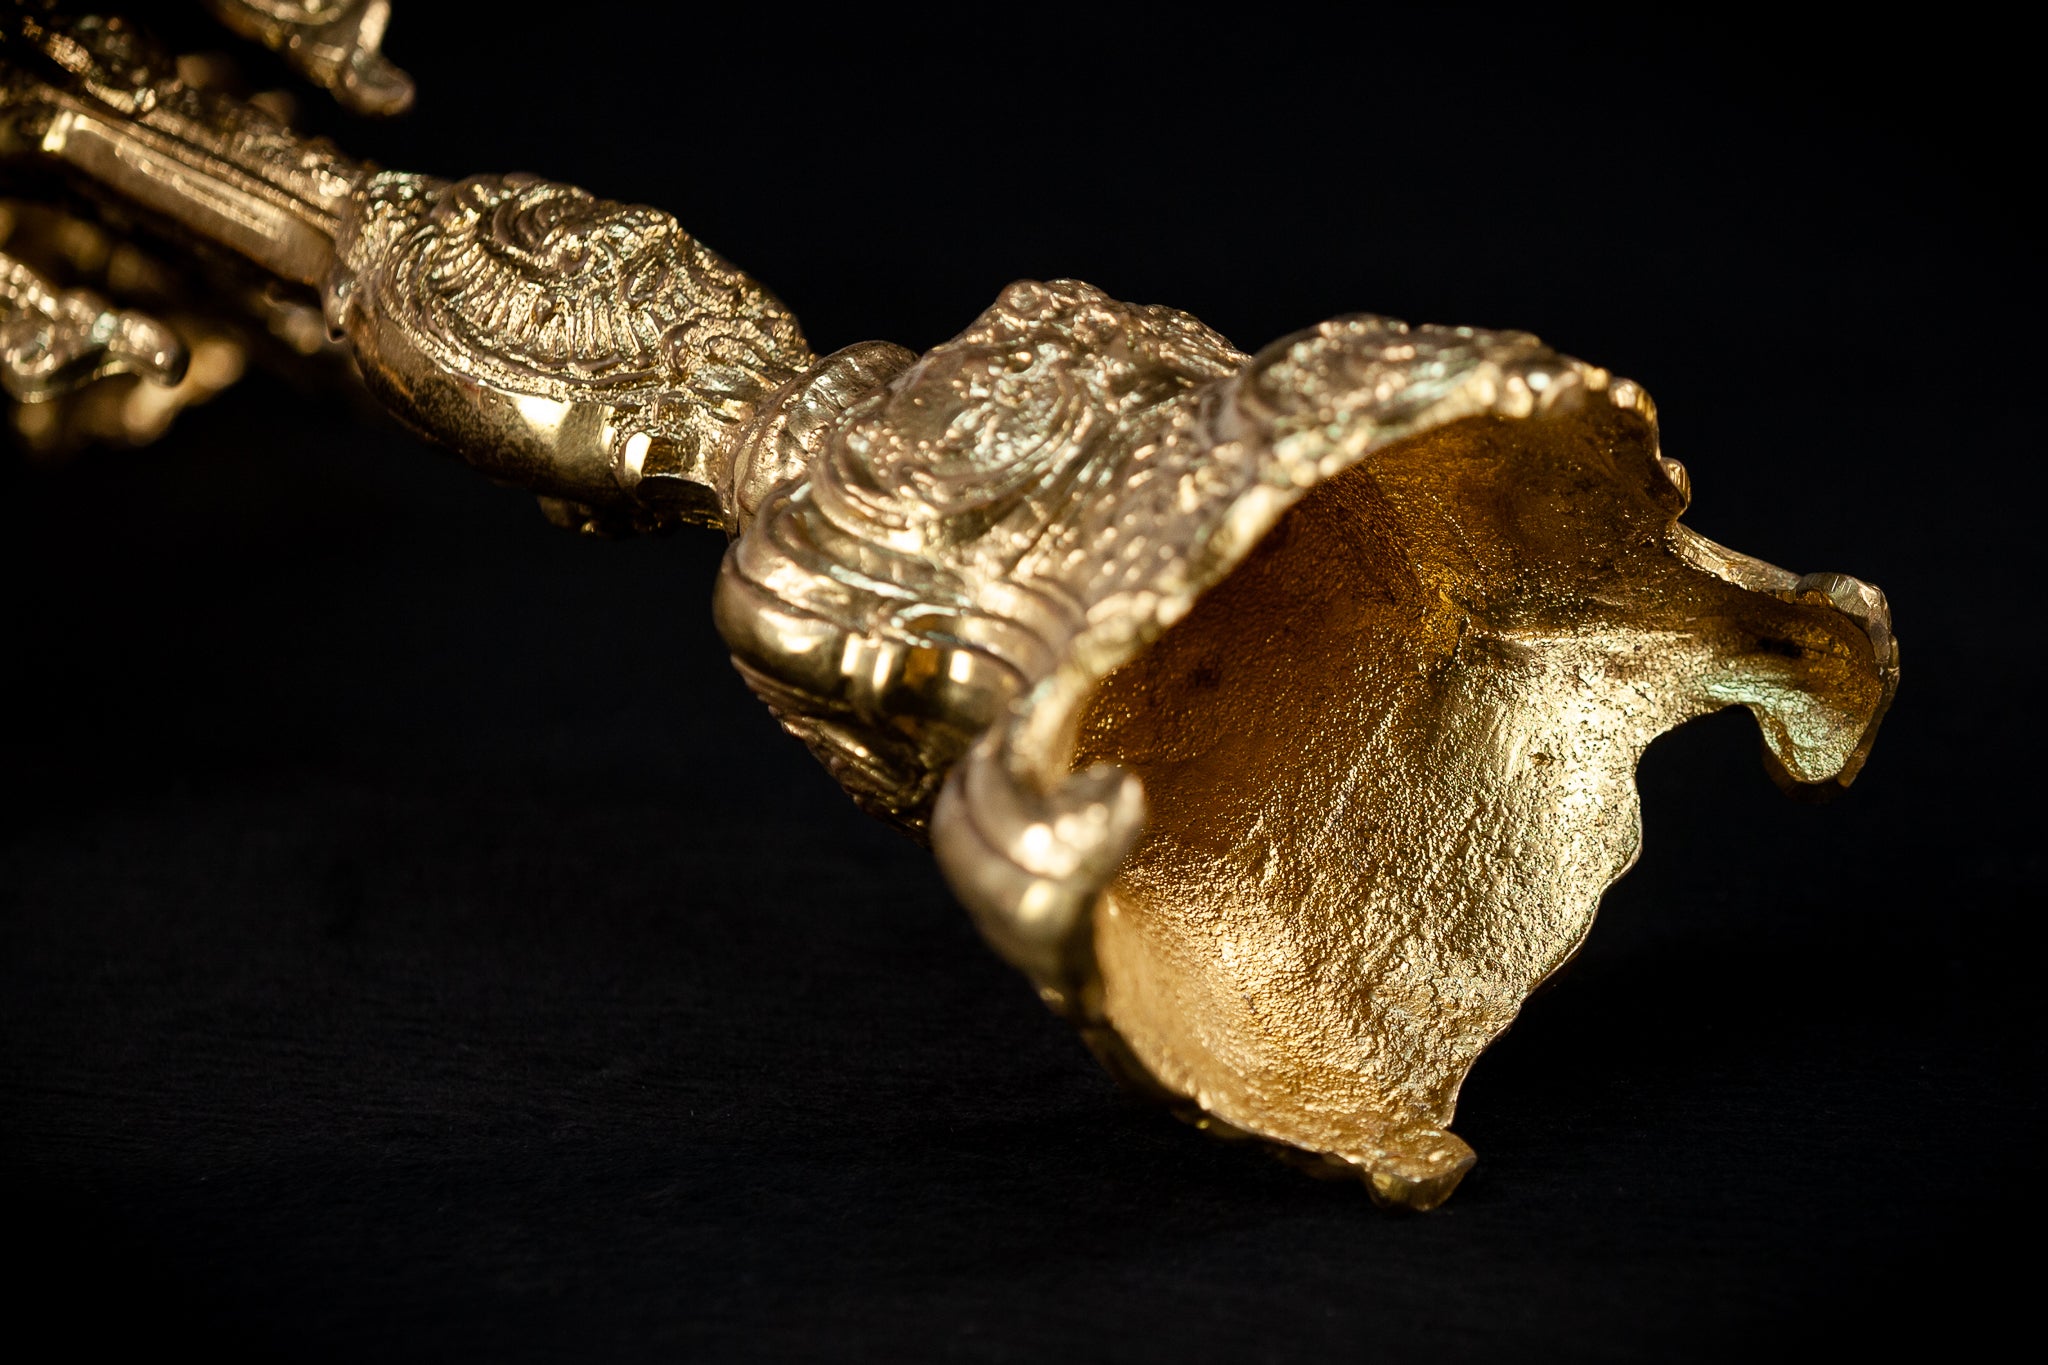 Pair of Bronze Candelabras  | Vintage 15" / 43 cm